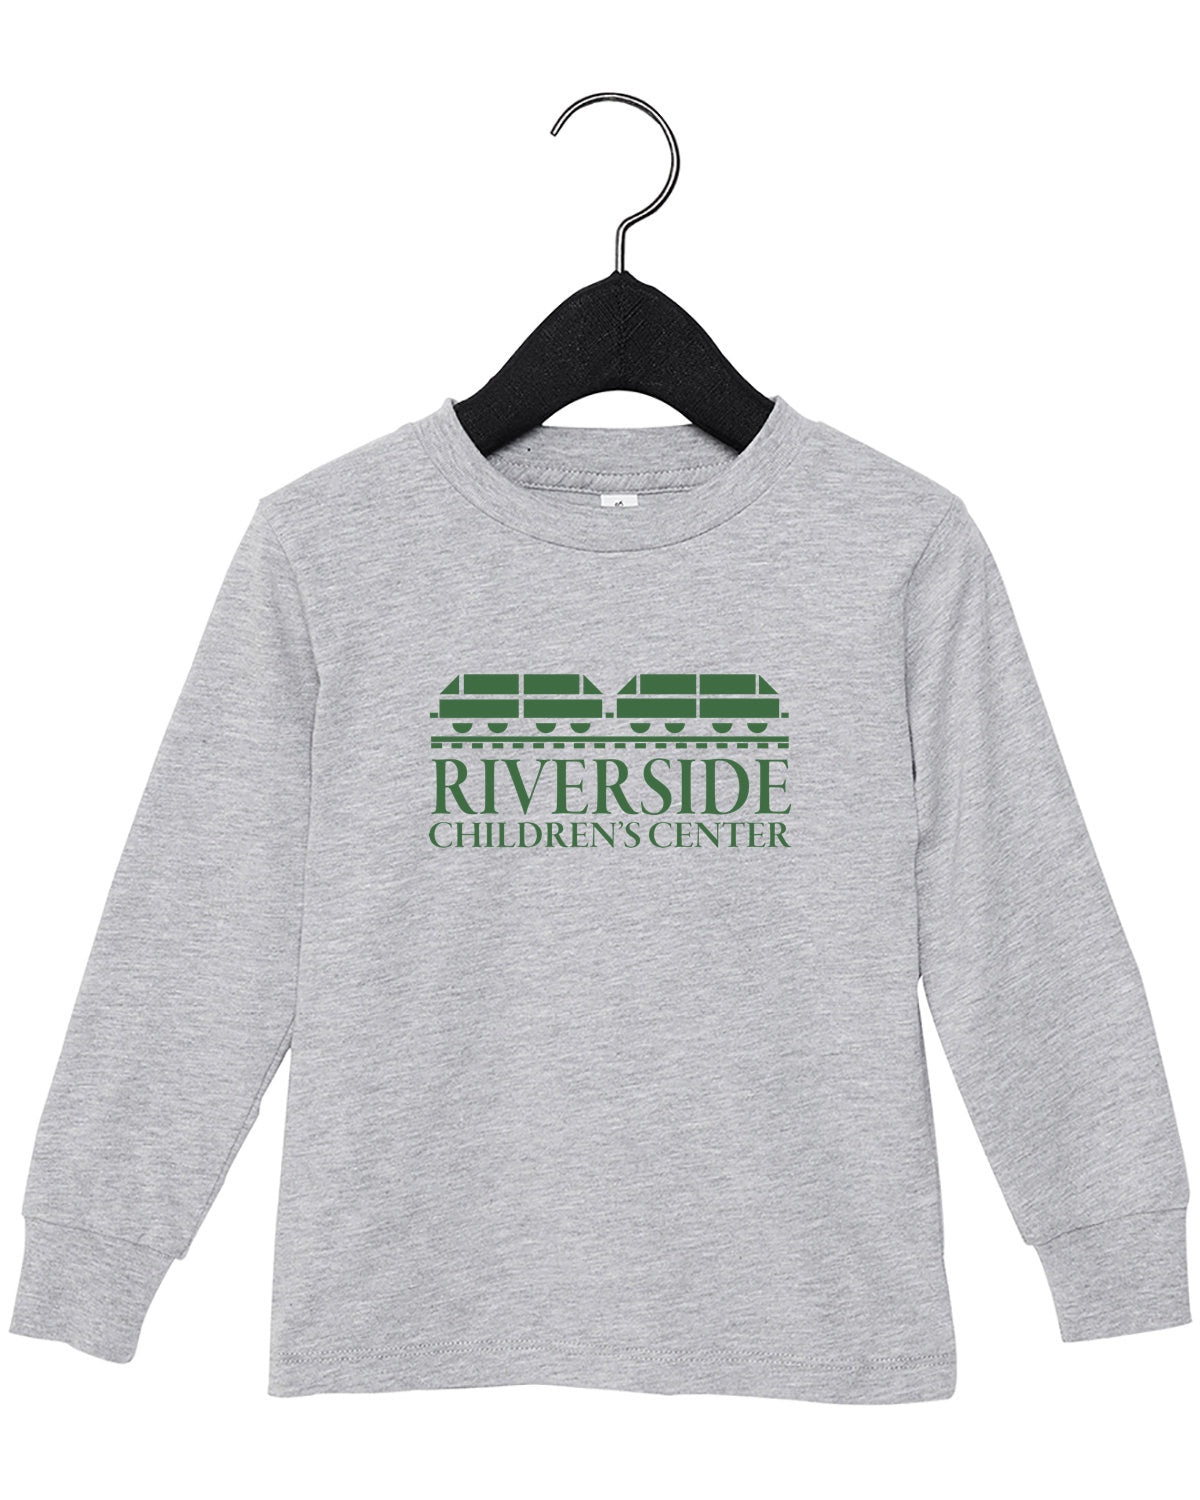 Riverside Toddler Long Sleeve (3501T)